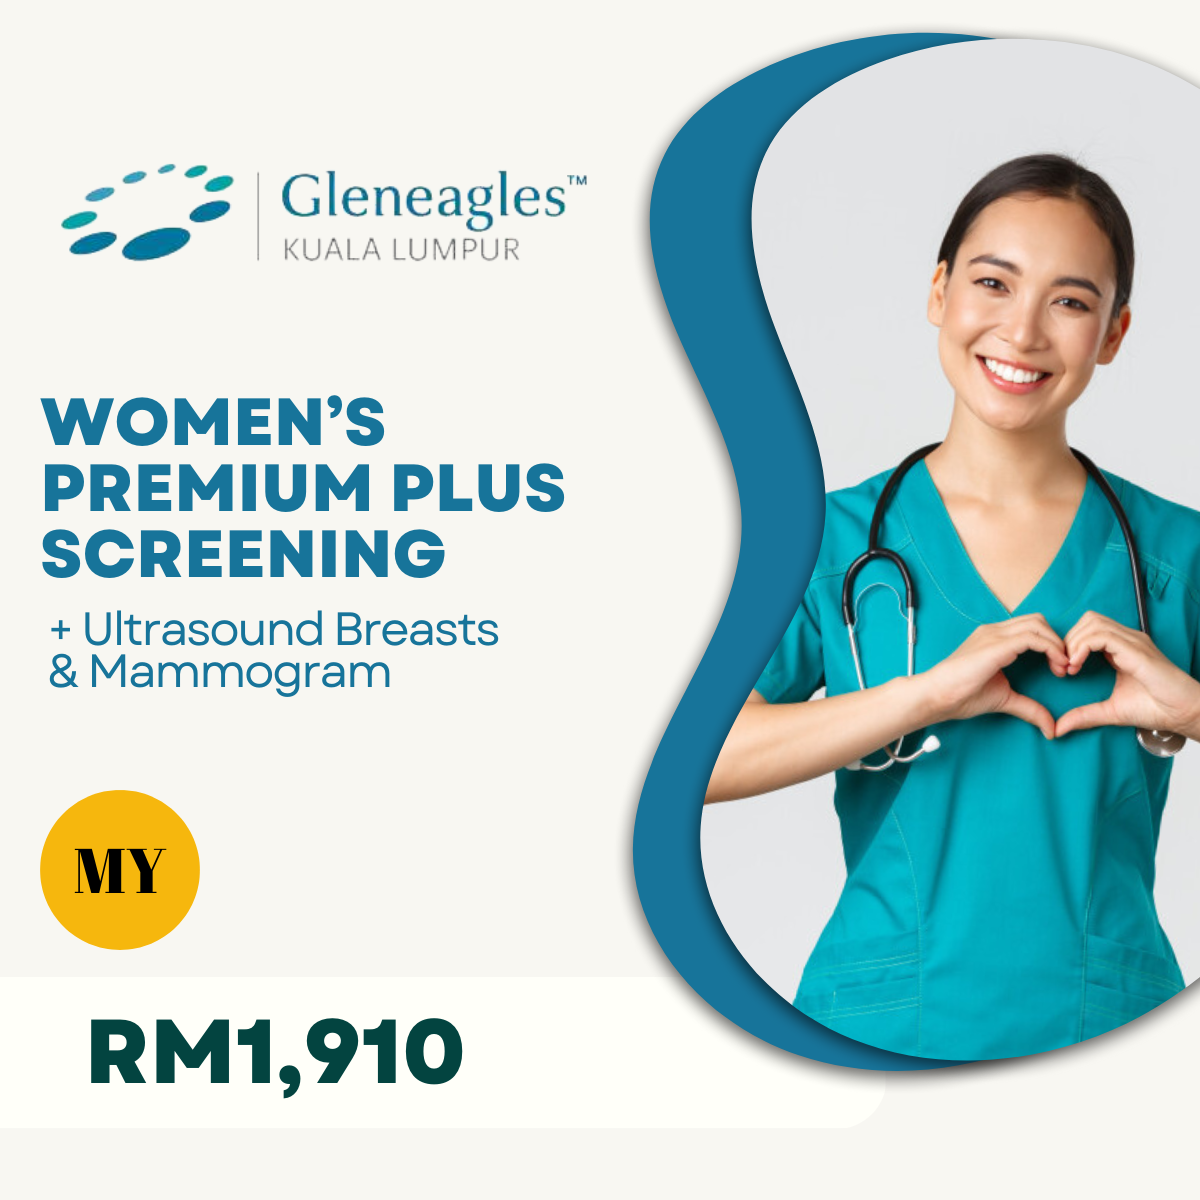 Gleneagles (KL) Women’s Premium Plus Screening Ultrasound Breasts & Mammogram